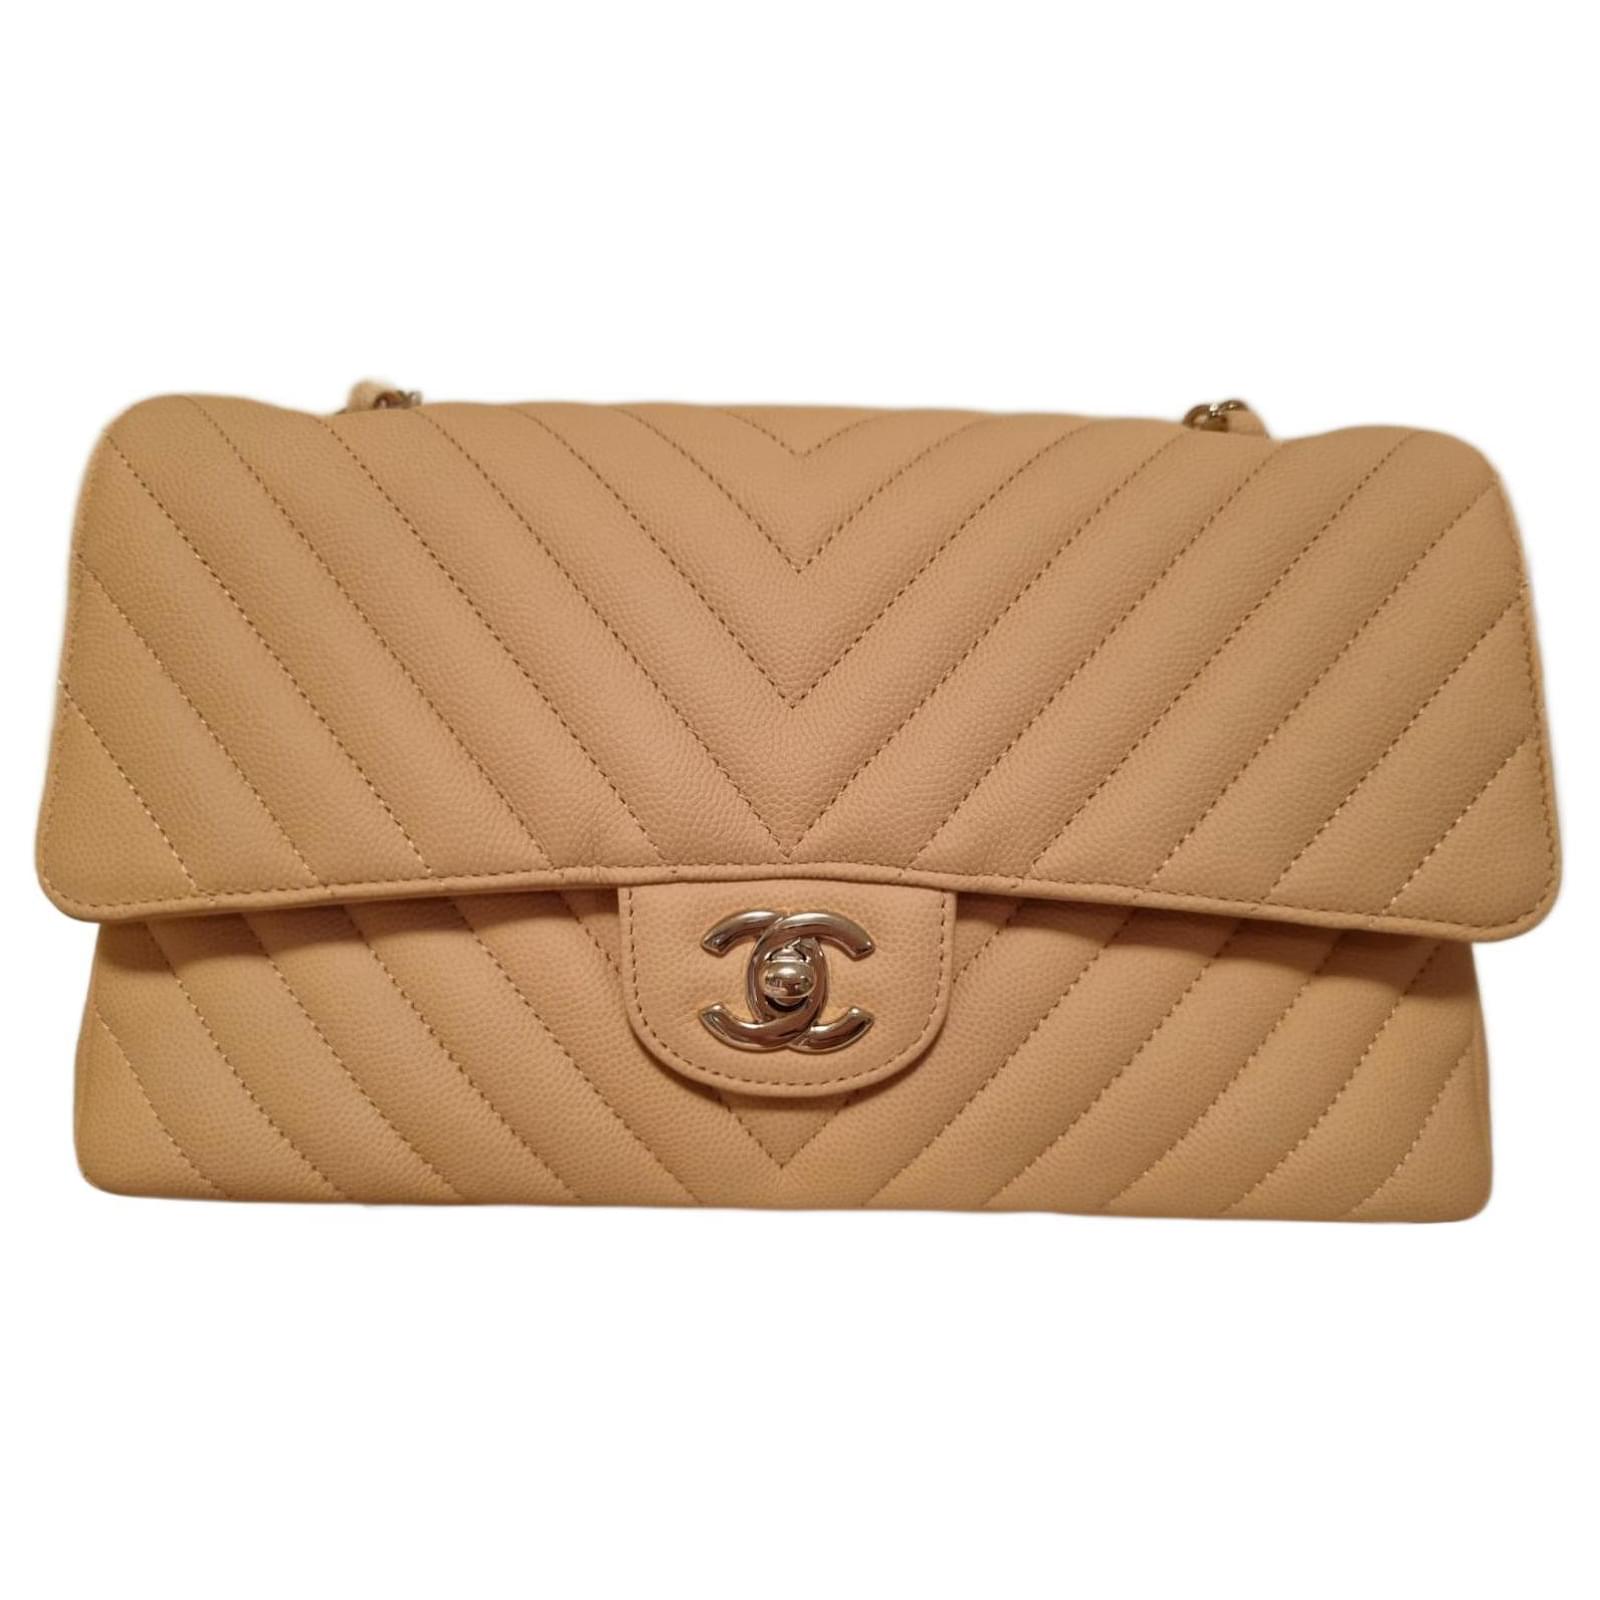 Handbags Chanel Chanel Chevron Classic Flap